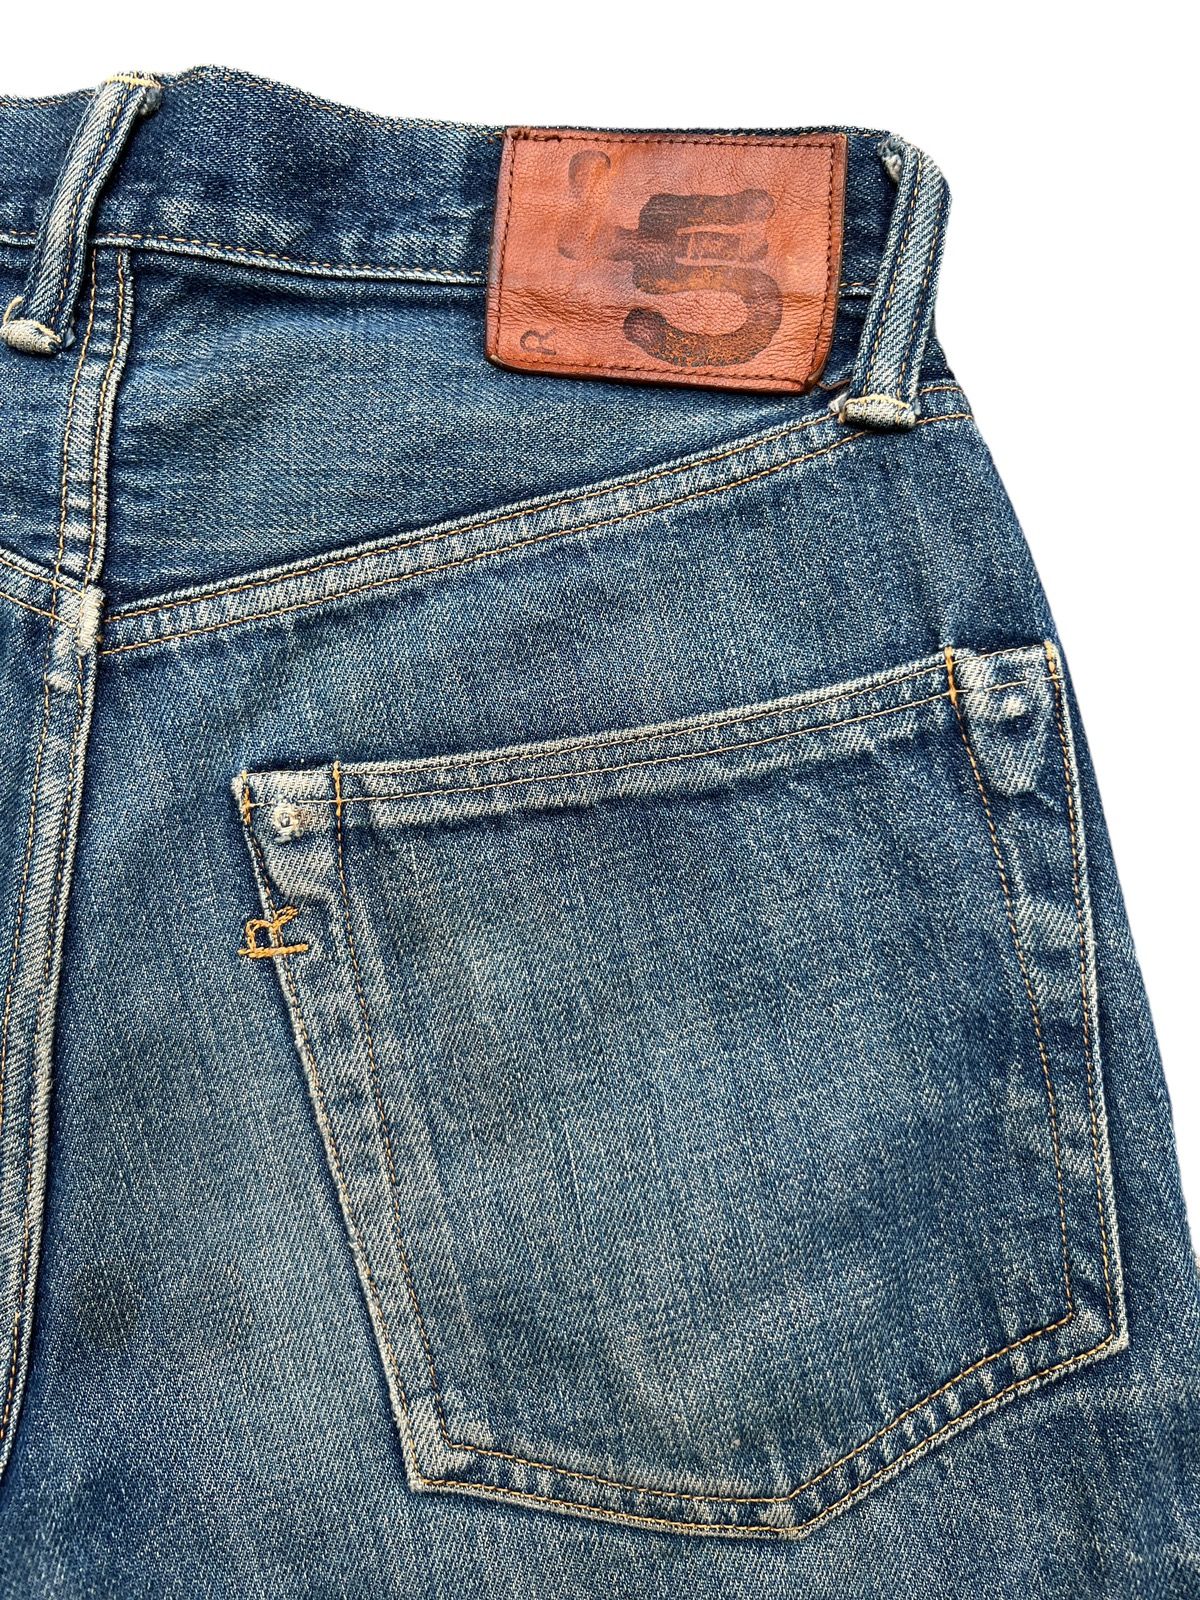 Vintage 45Rpm Selvedge Faded Distressed Denim Jeans 29x29 - 10